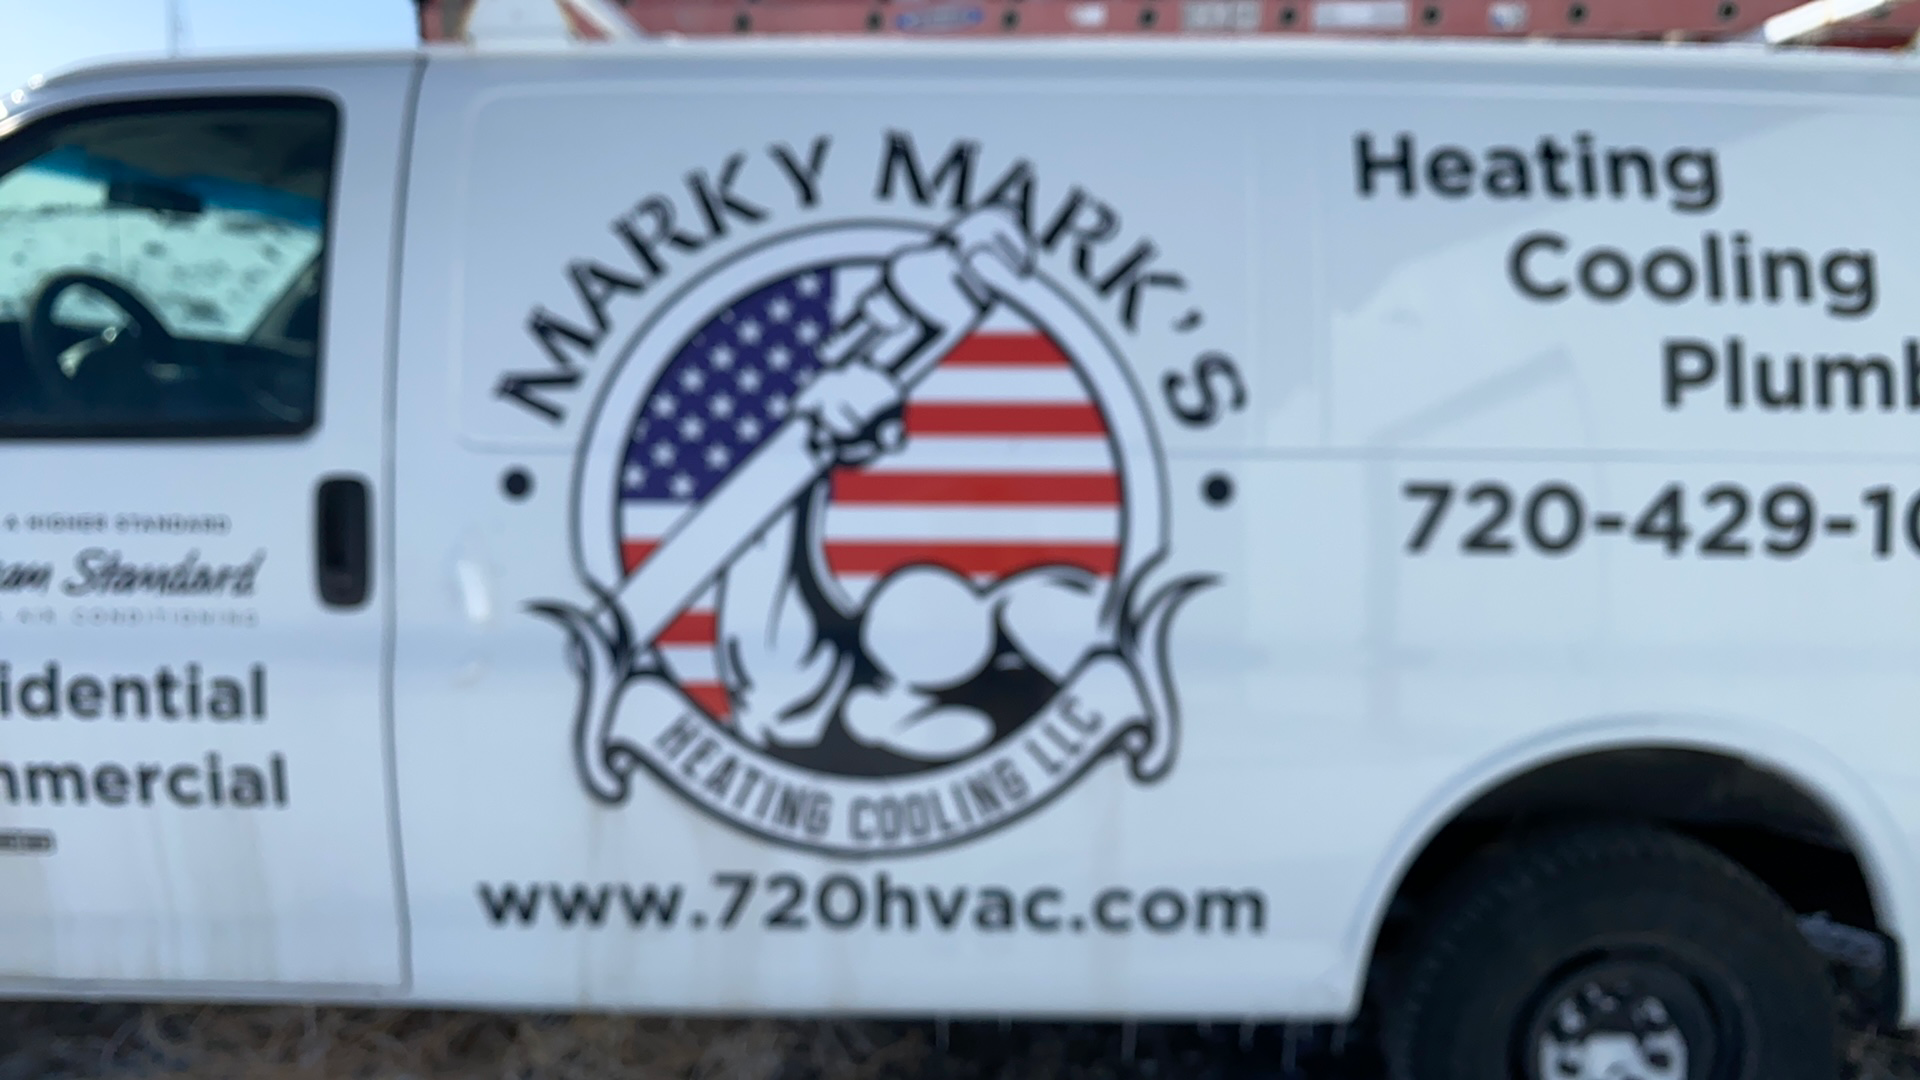 Marky Mark's Heating, Cooling & Plumbing, LLC